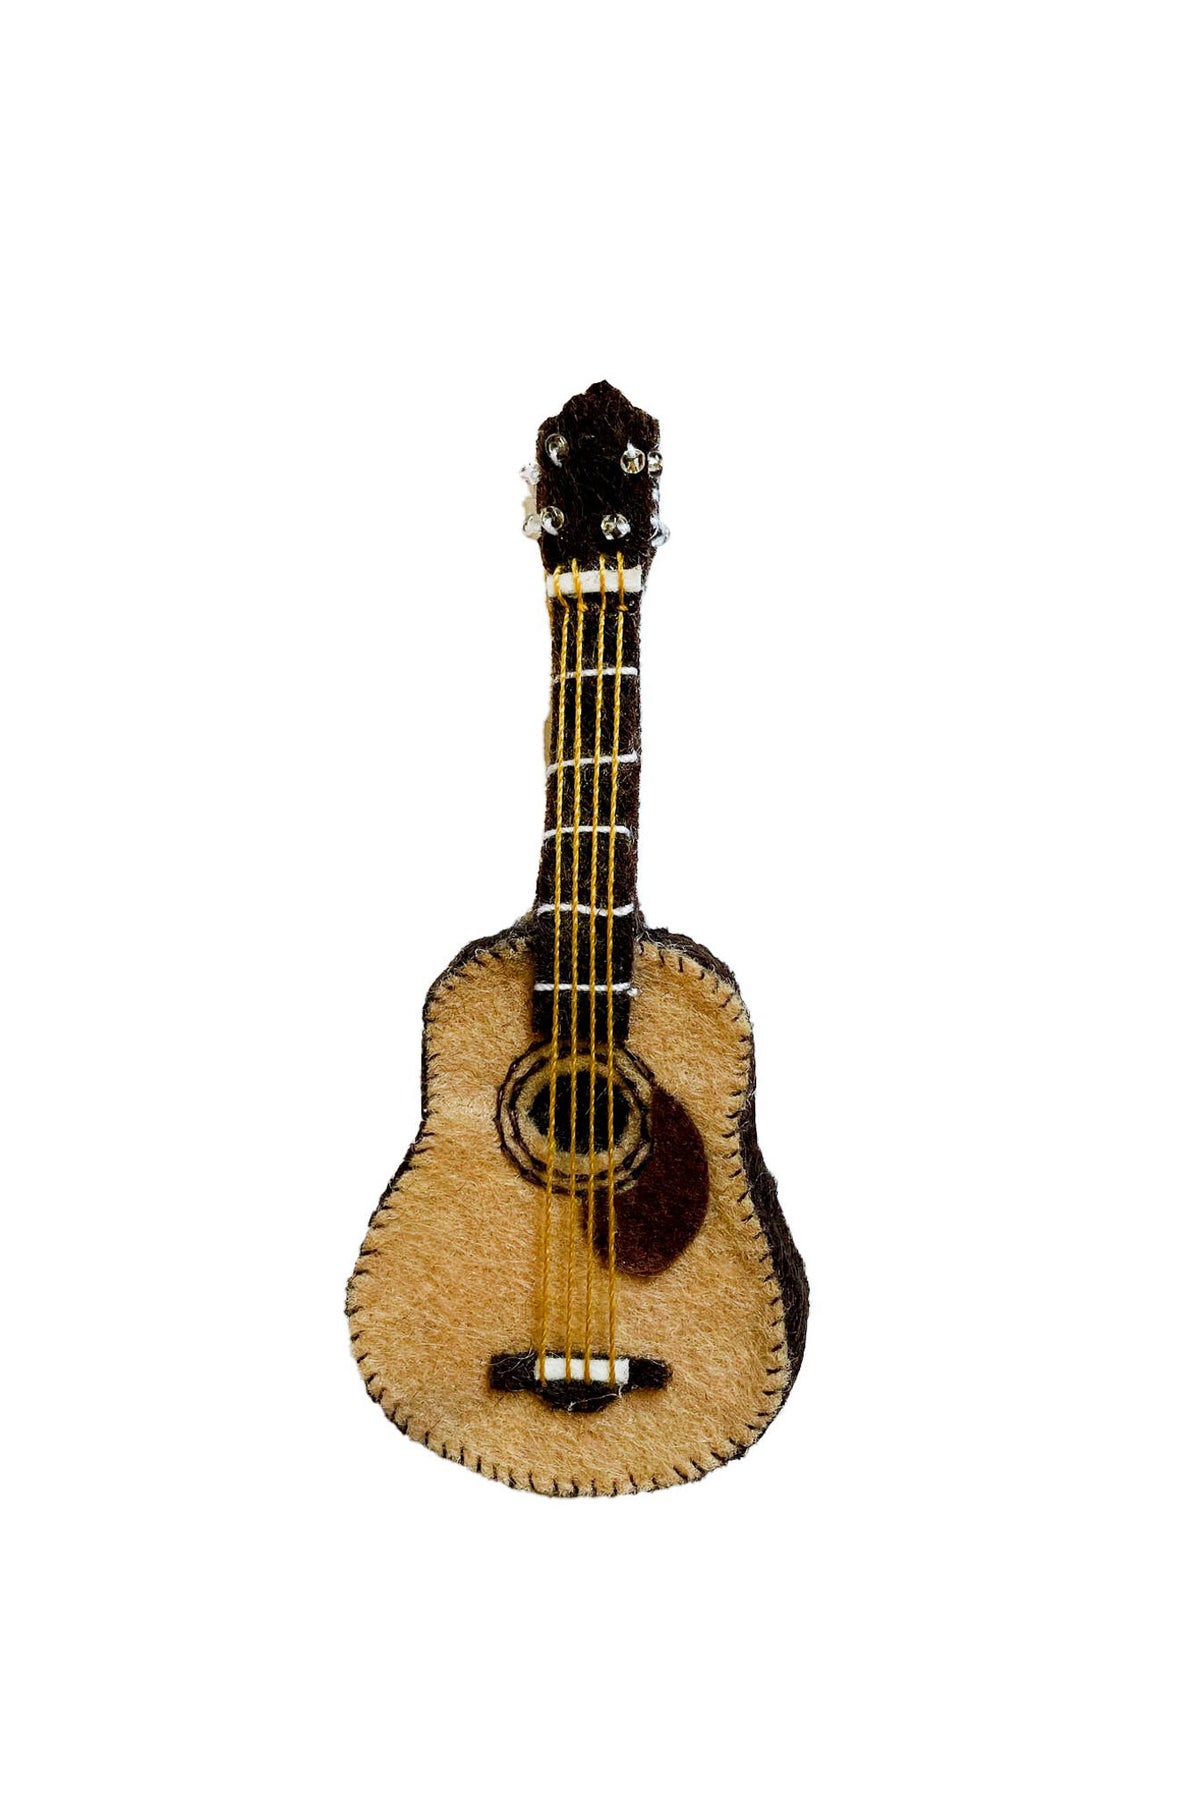 Silk Road Bazaar Acoustic Guitar Ornament